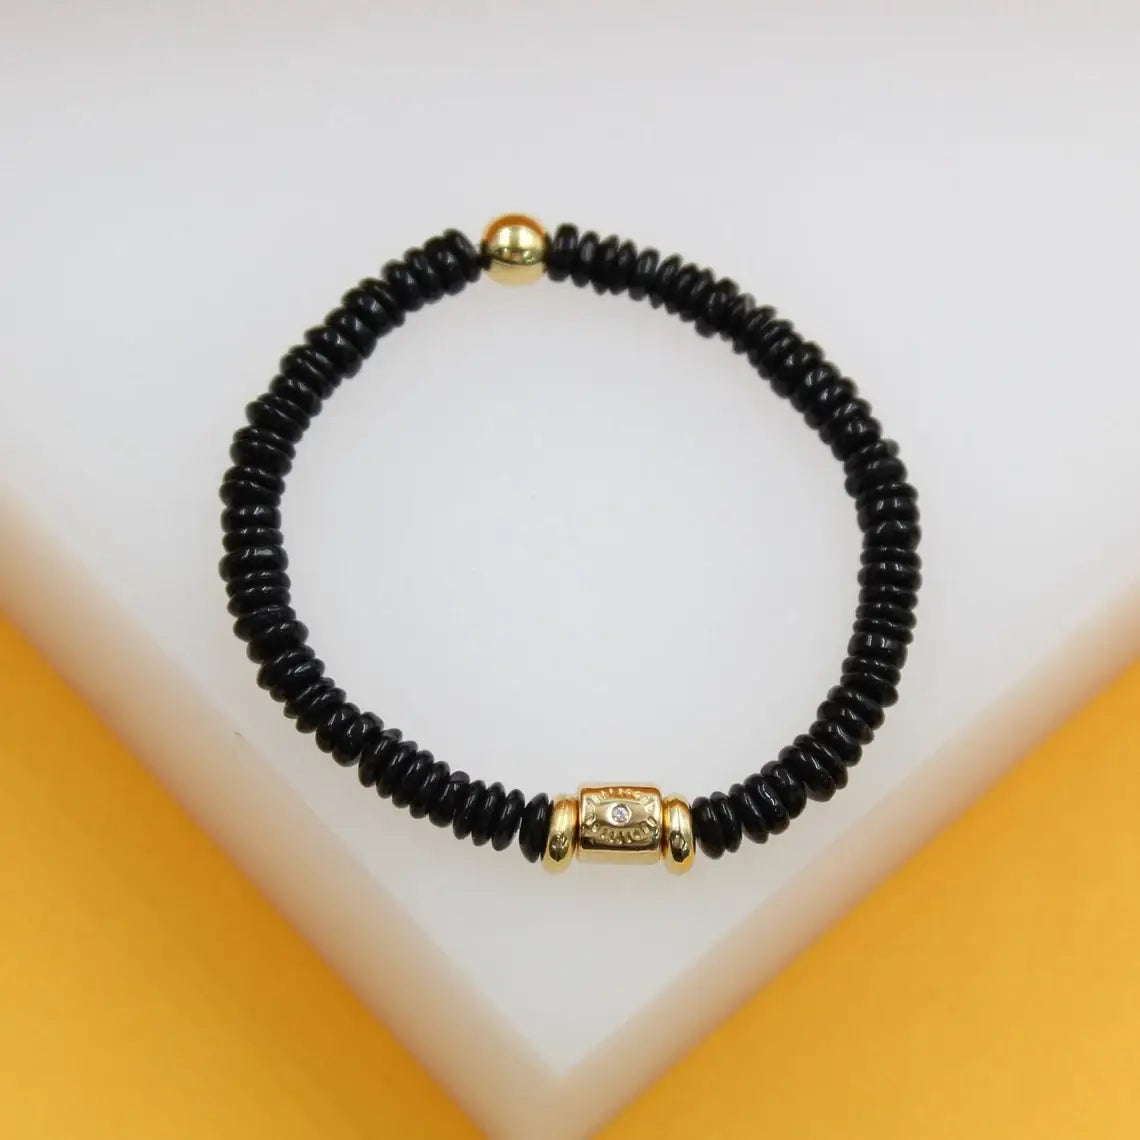 gold evil eye bracelet with black discs